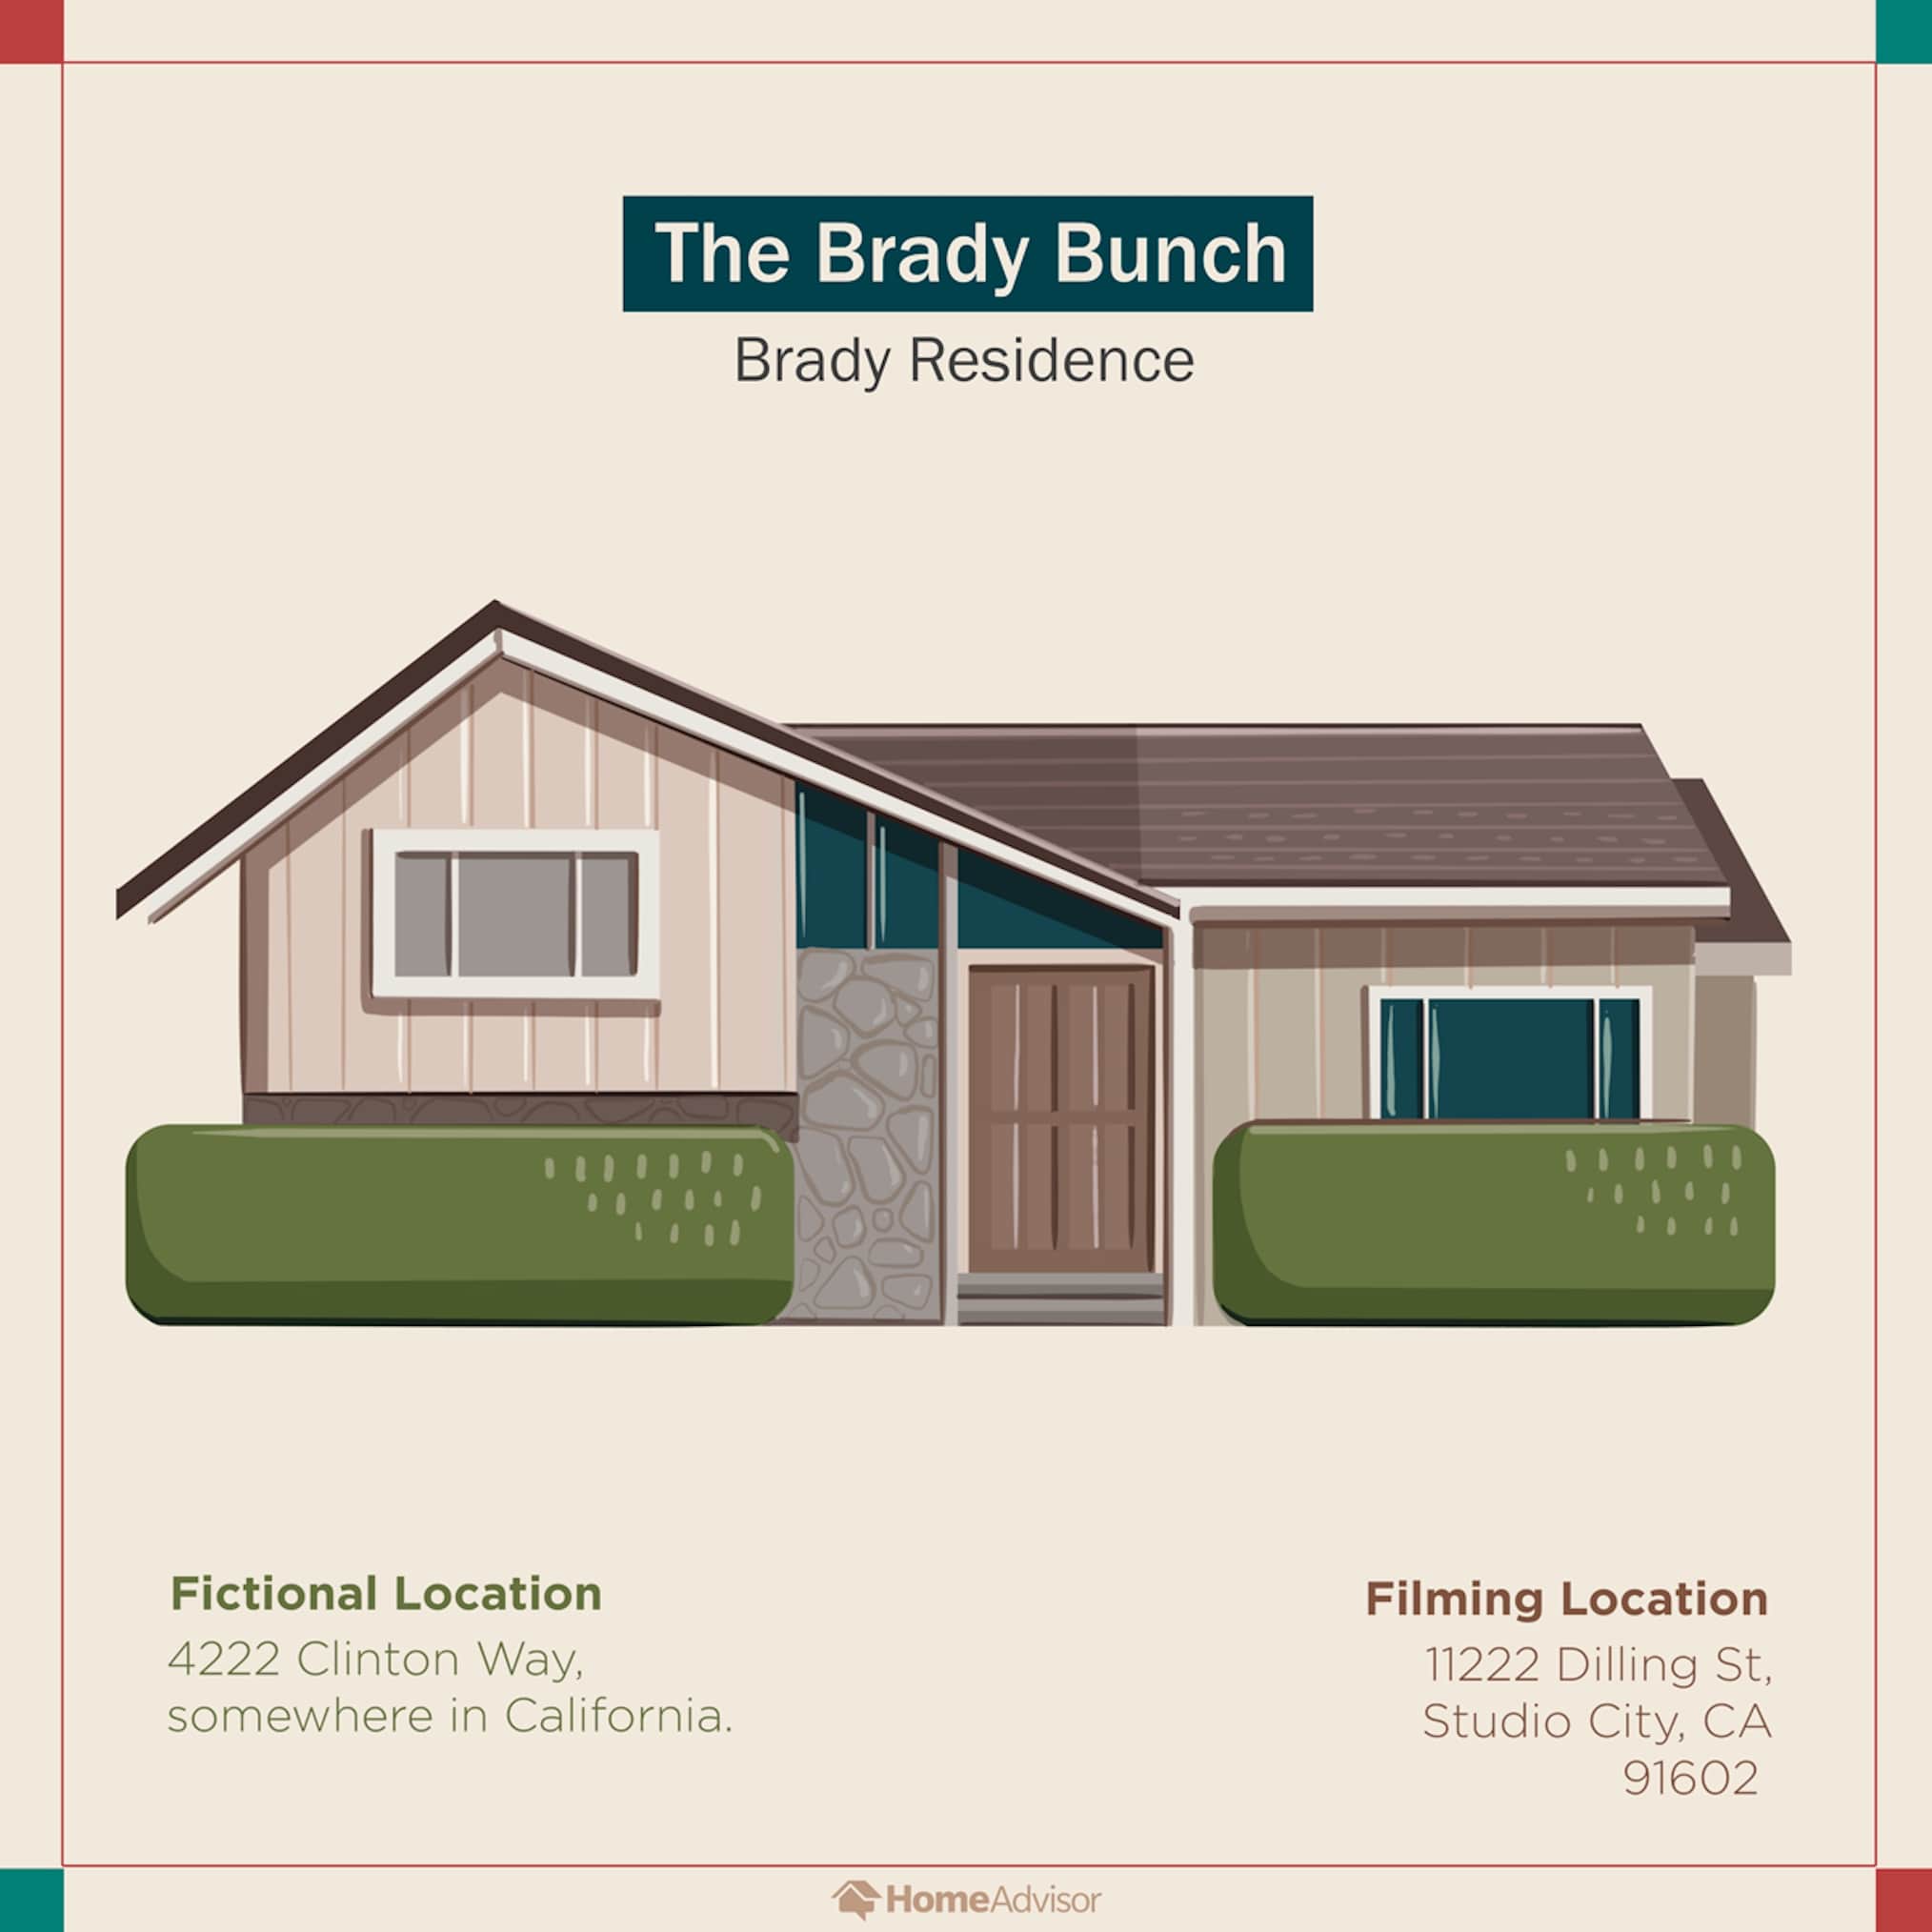 TV Homes, The Brady Bunch